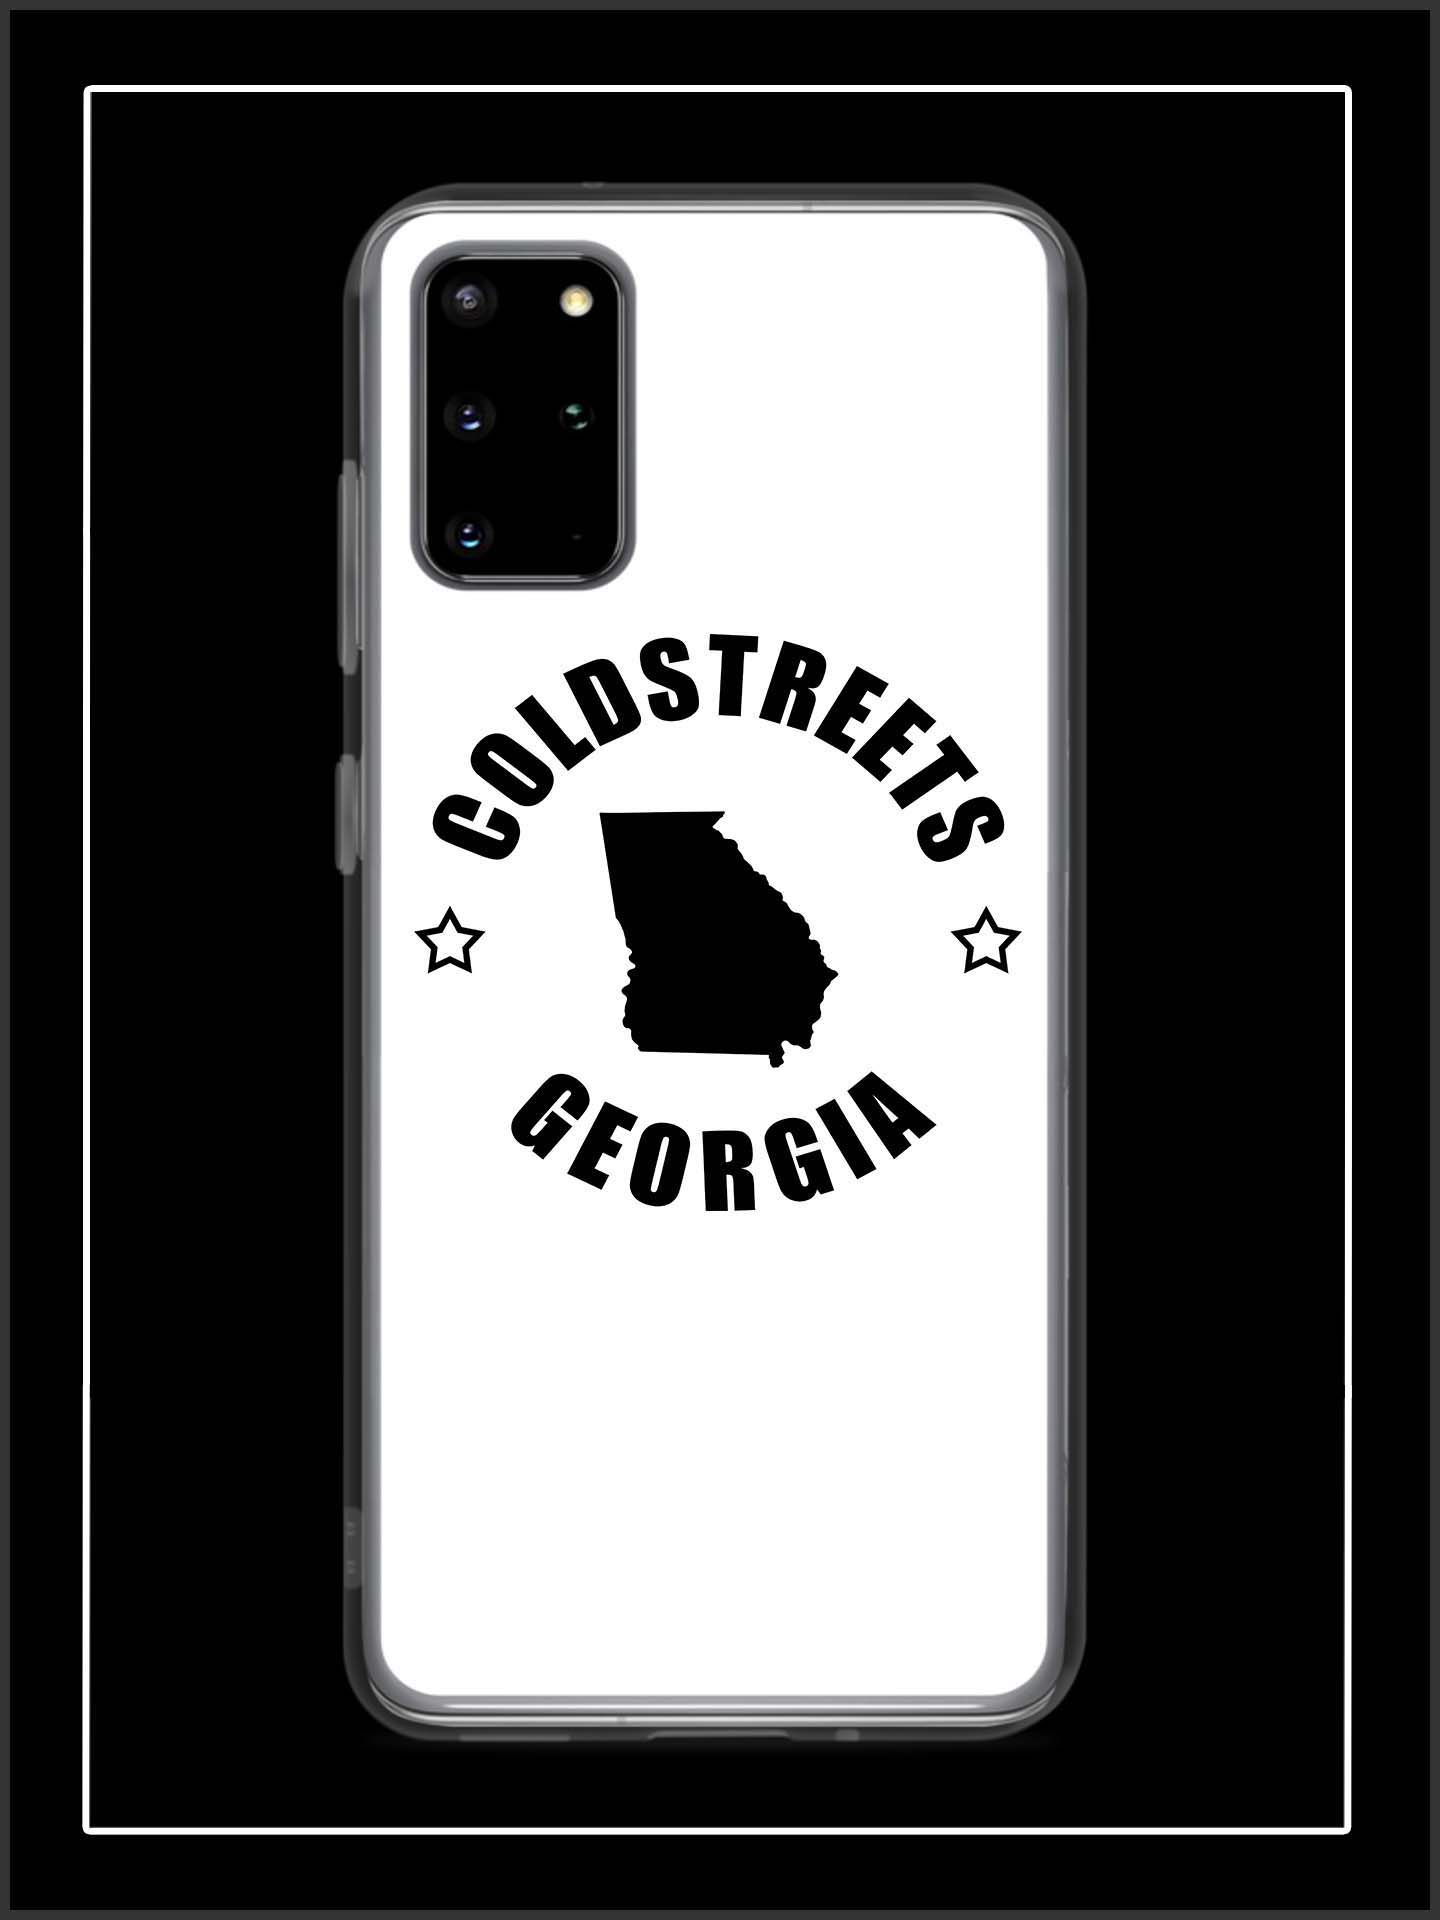 Cold Streets Georgia Samsung Cases